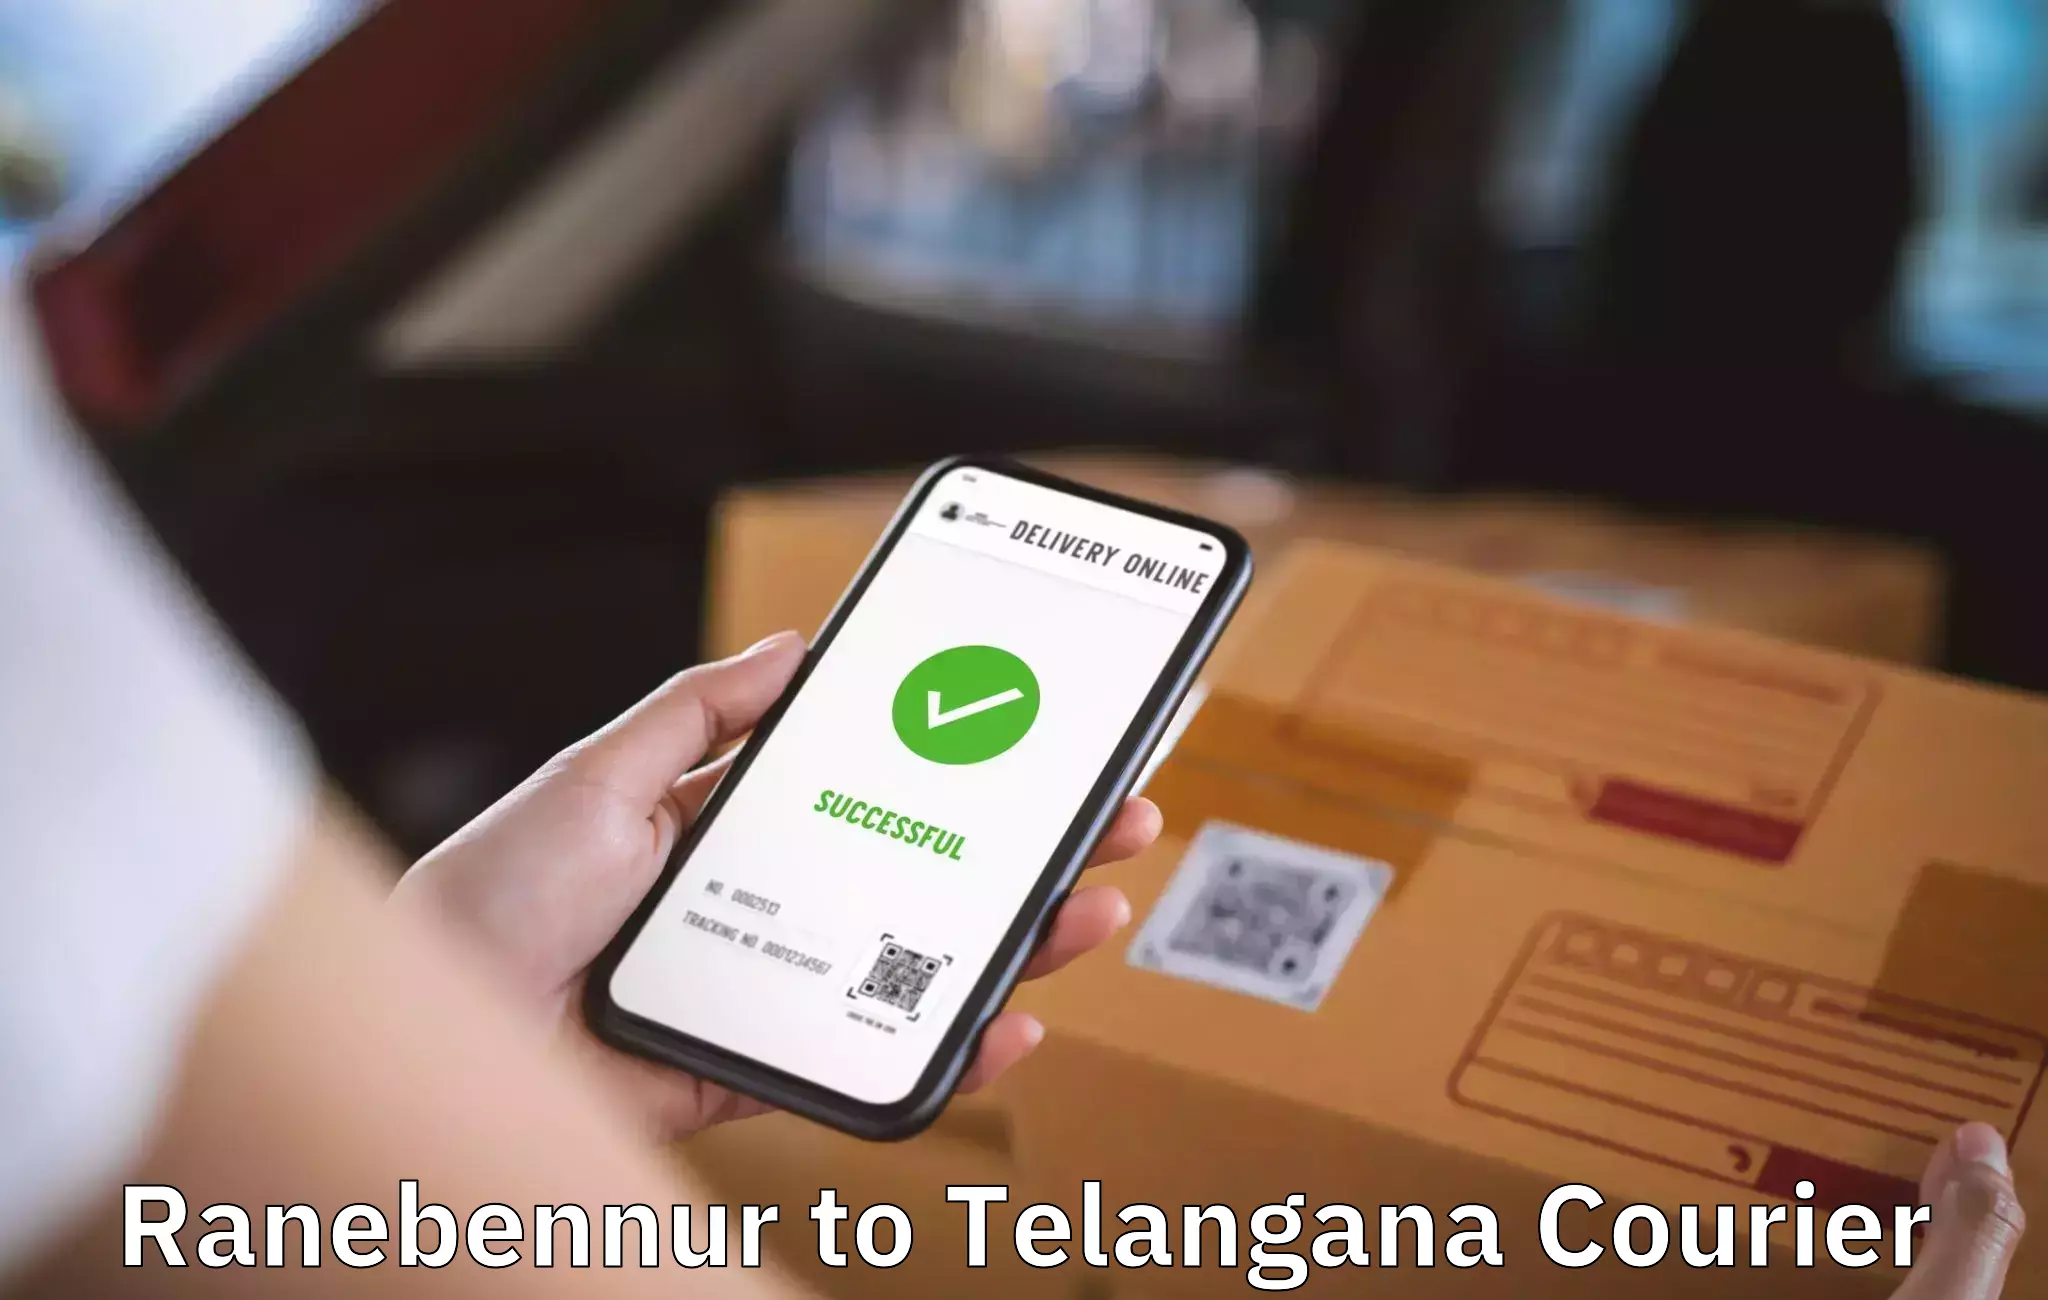 Efficient moving company Ranebennur to Mahabubnagar